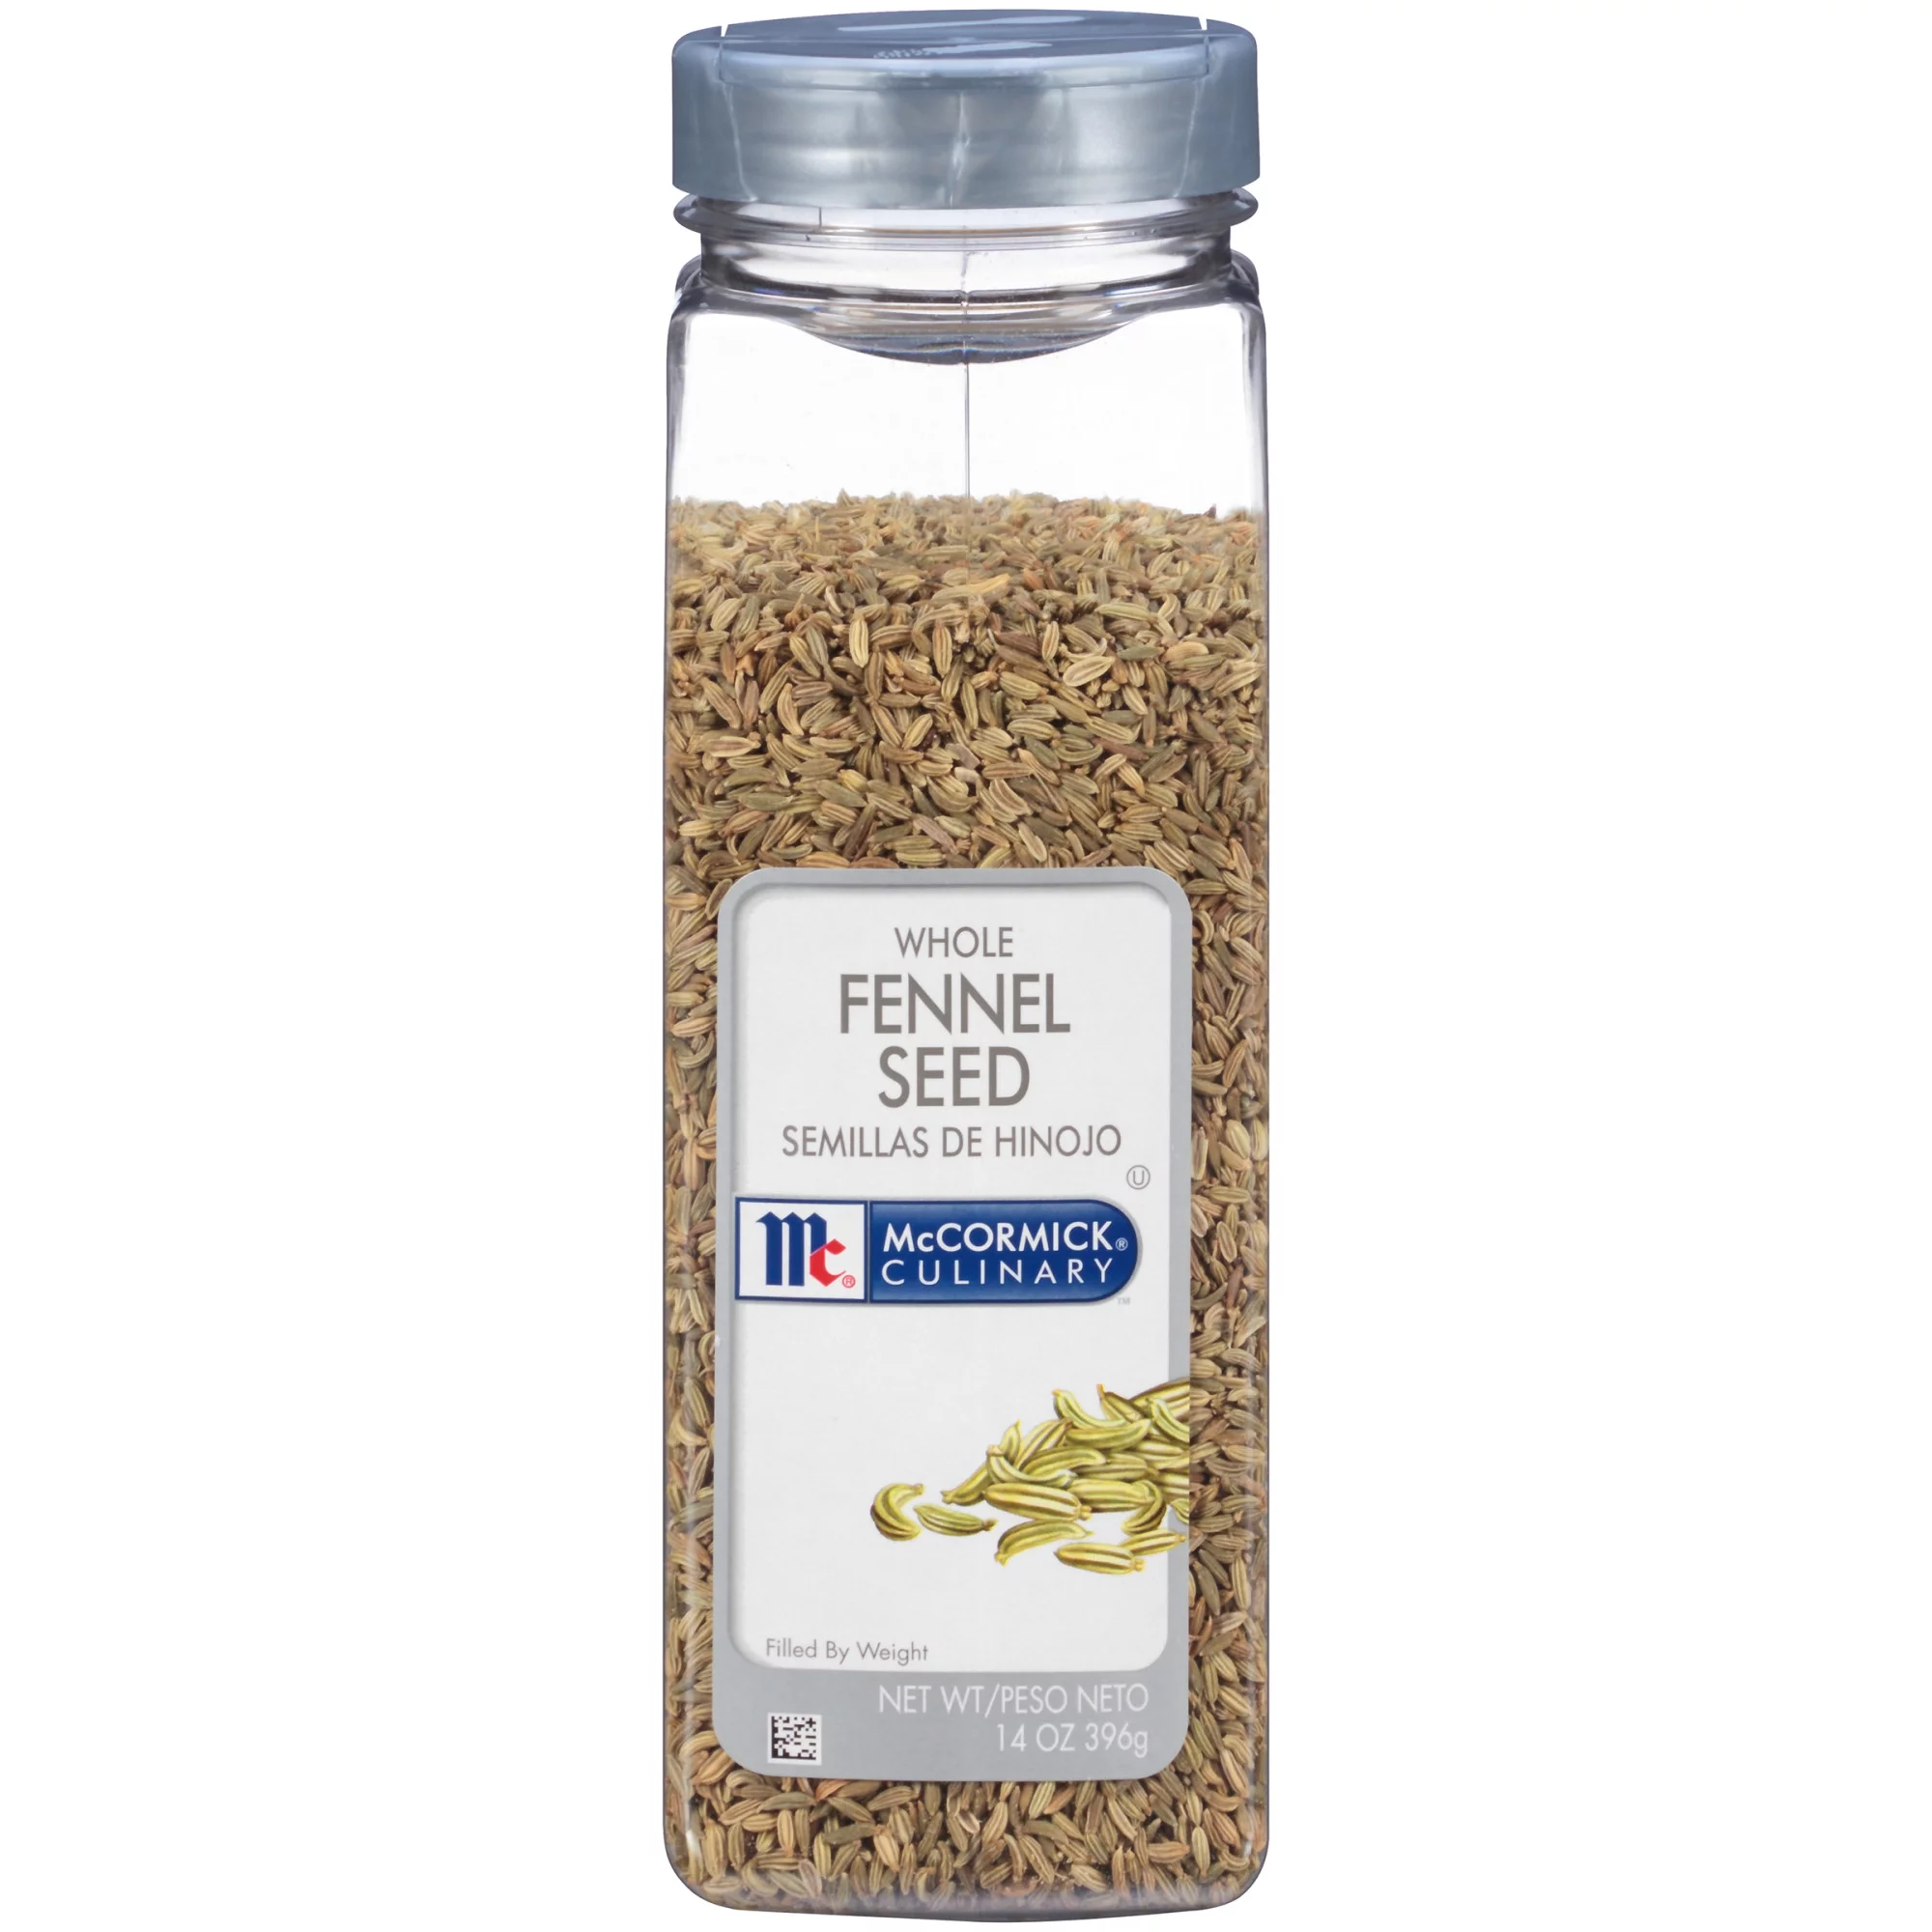 McCormick Culinary Whole Fennel Seed, 14 oz